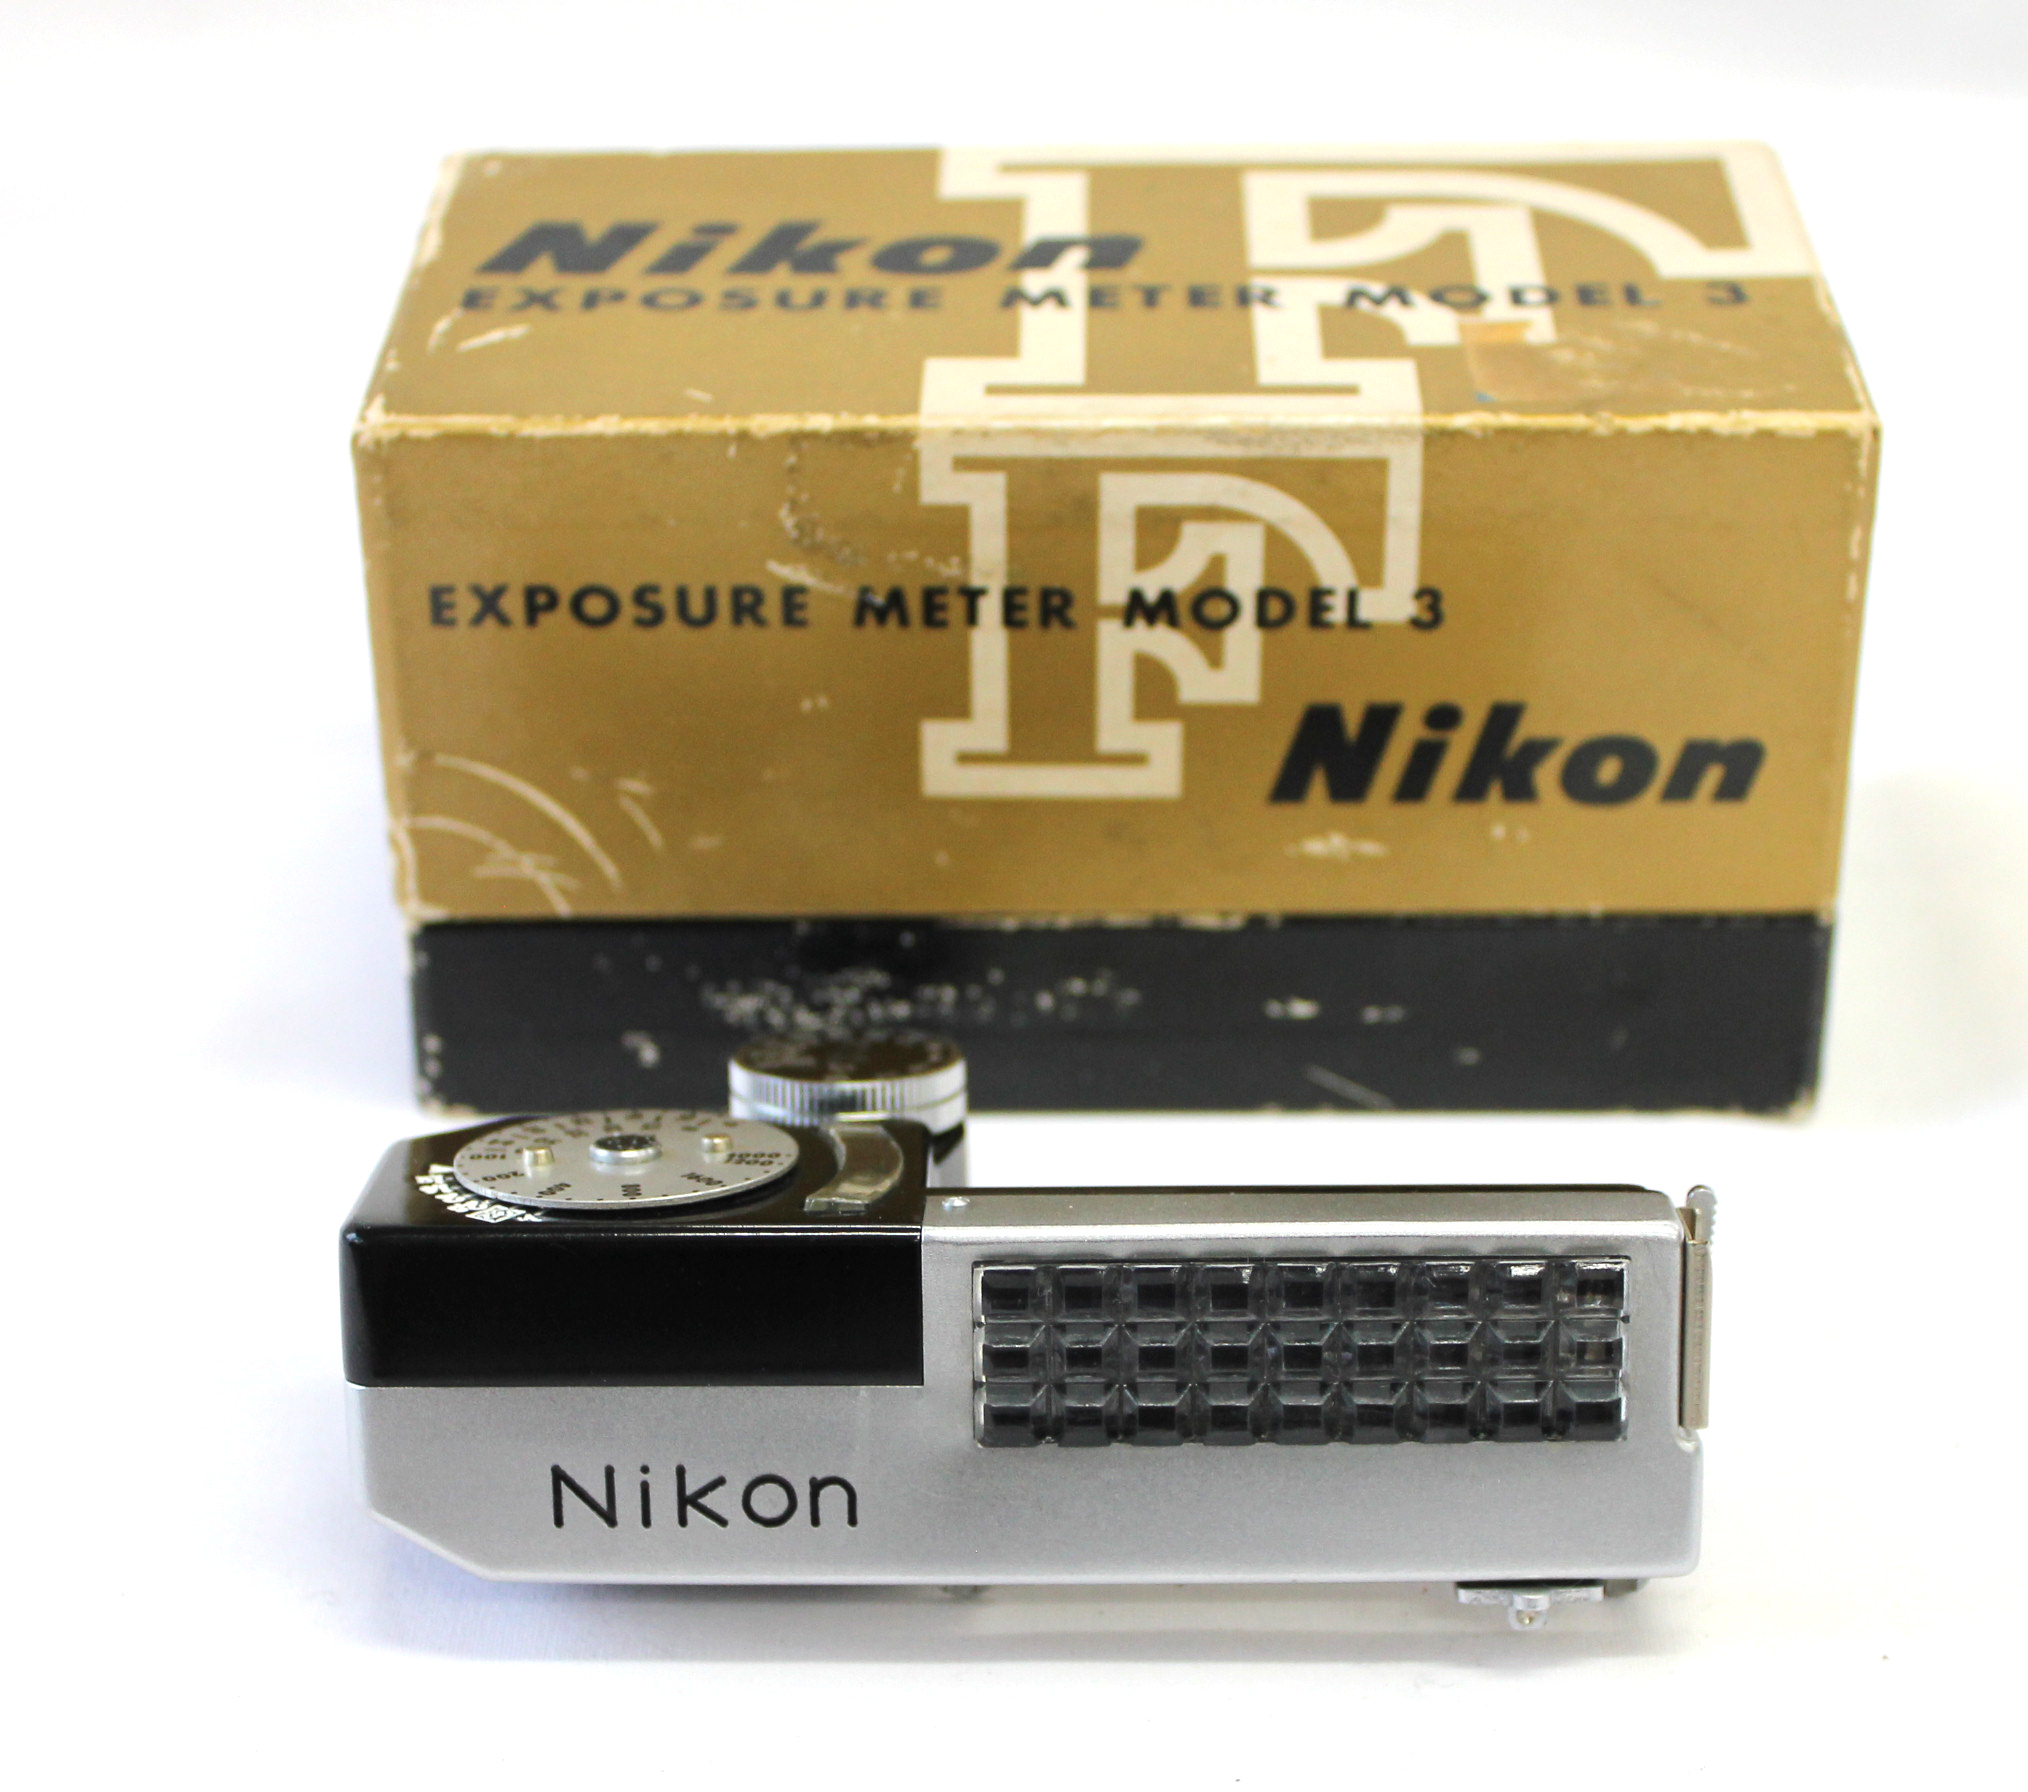 Japan Used Camera Shop | [Excellent++++] Nikon F Exposure Meter Model 3 in Box from Japan